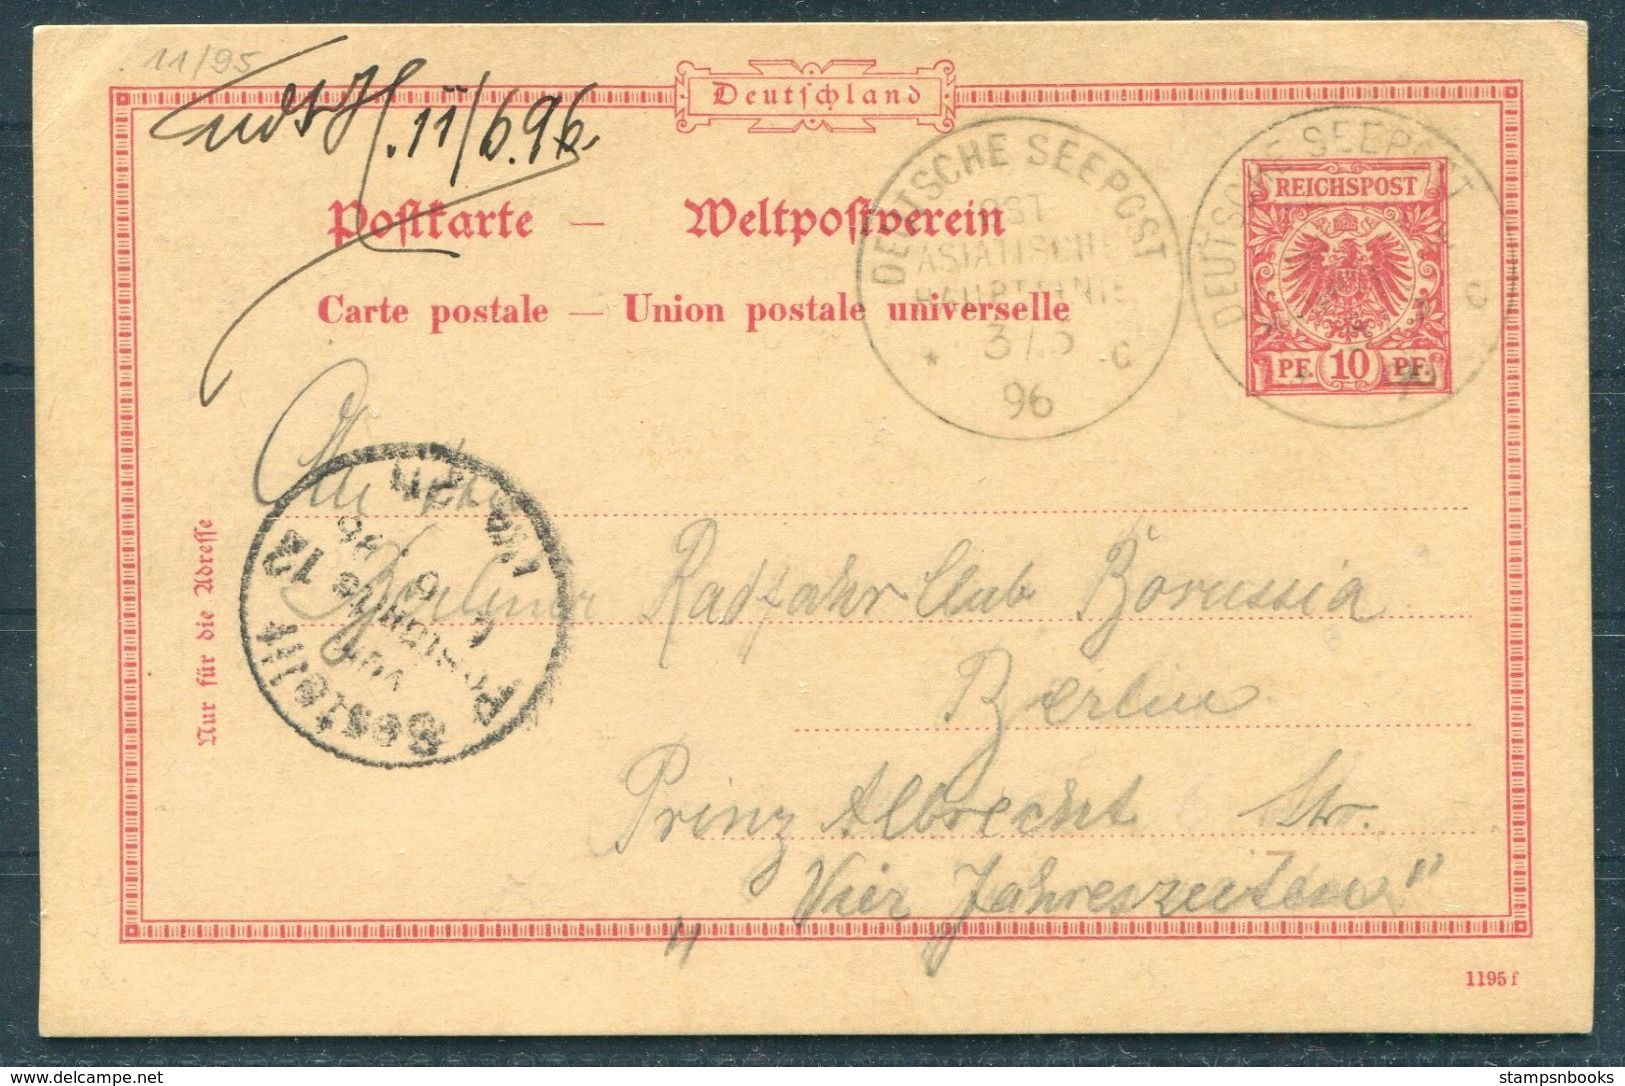 1896 China Germany Stationery Postcard, Deutsche Seepost - Berlin. Ship OSTASIATISCHE HAUBTLINIE - Brieven En Documenten